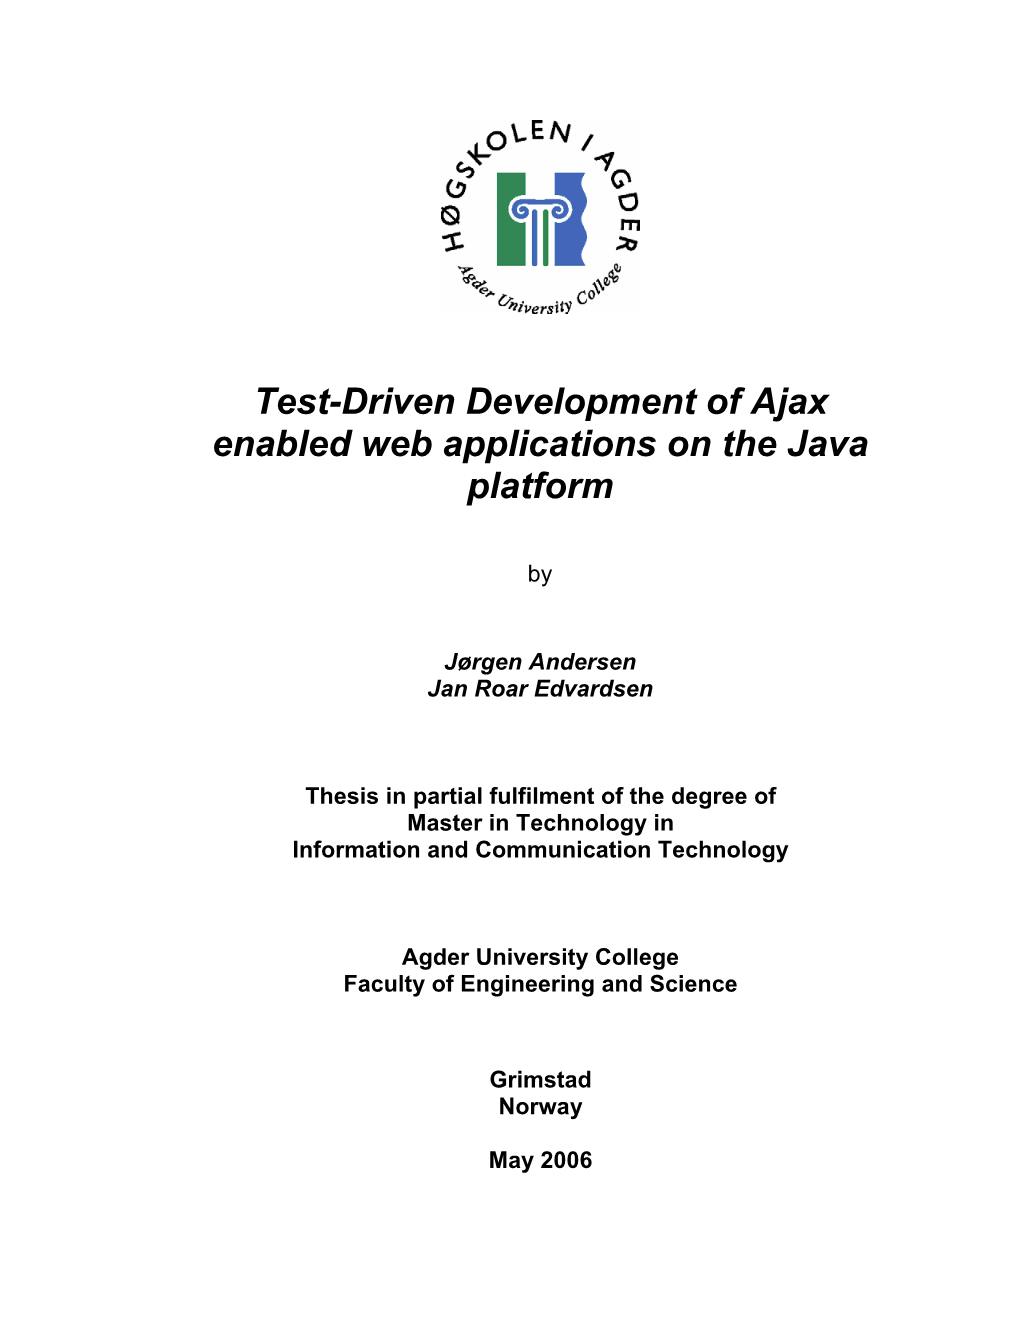 Test-Driven Development of Ajax Enabled Web Applications on the Java Platform